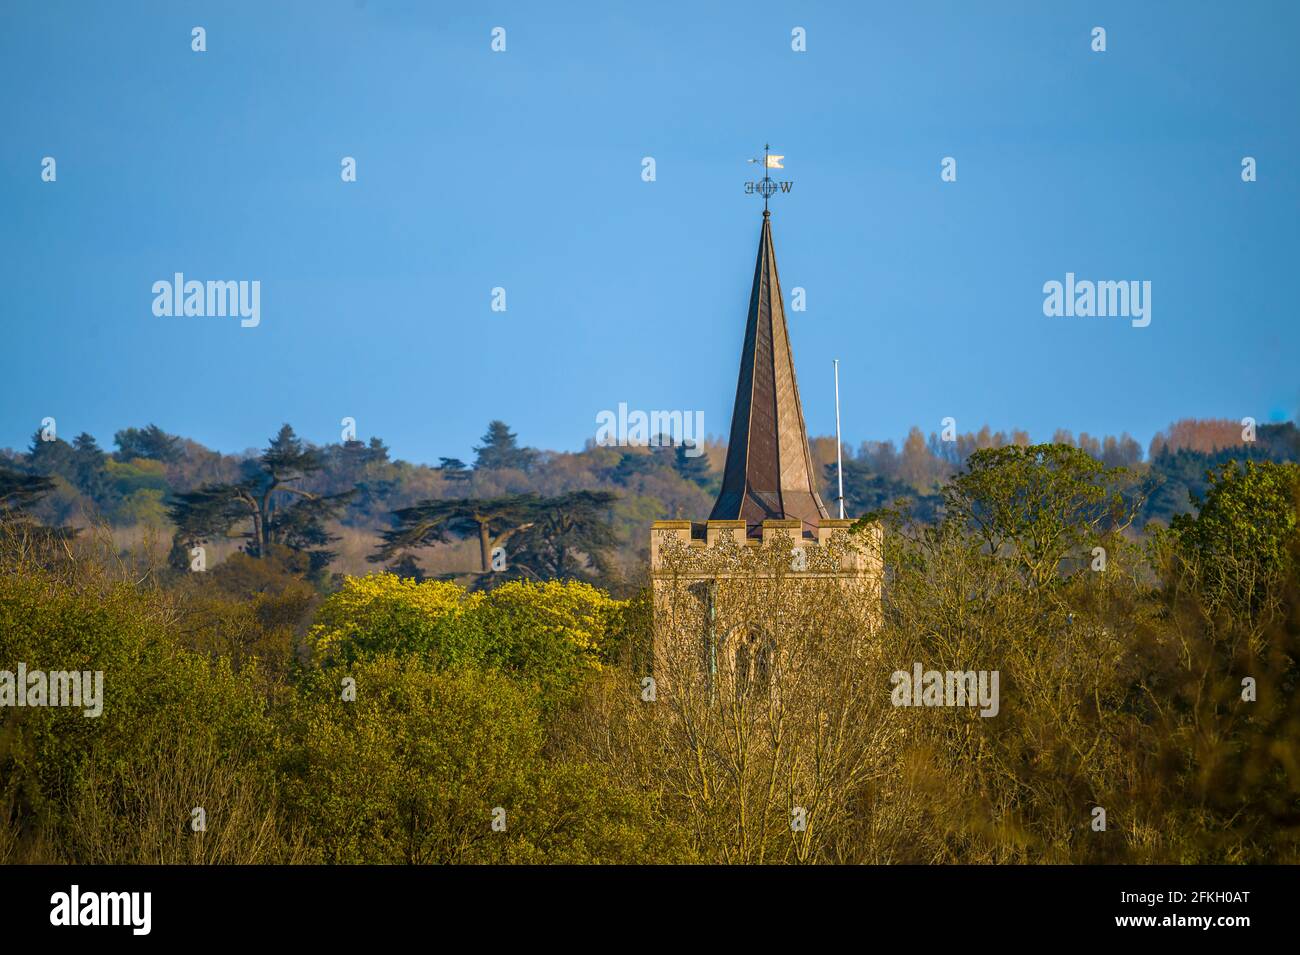 Chiesa torre al tramonto in Inghilterra Foto Stock